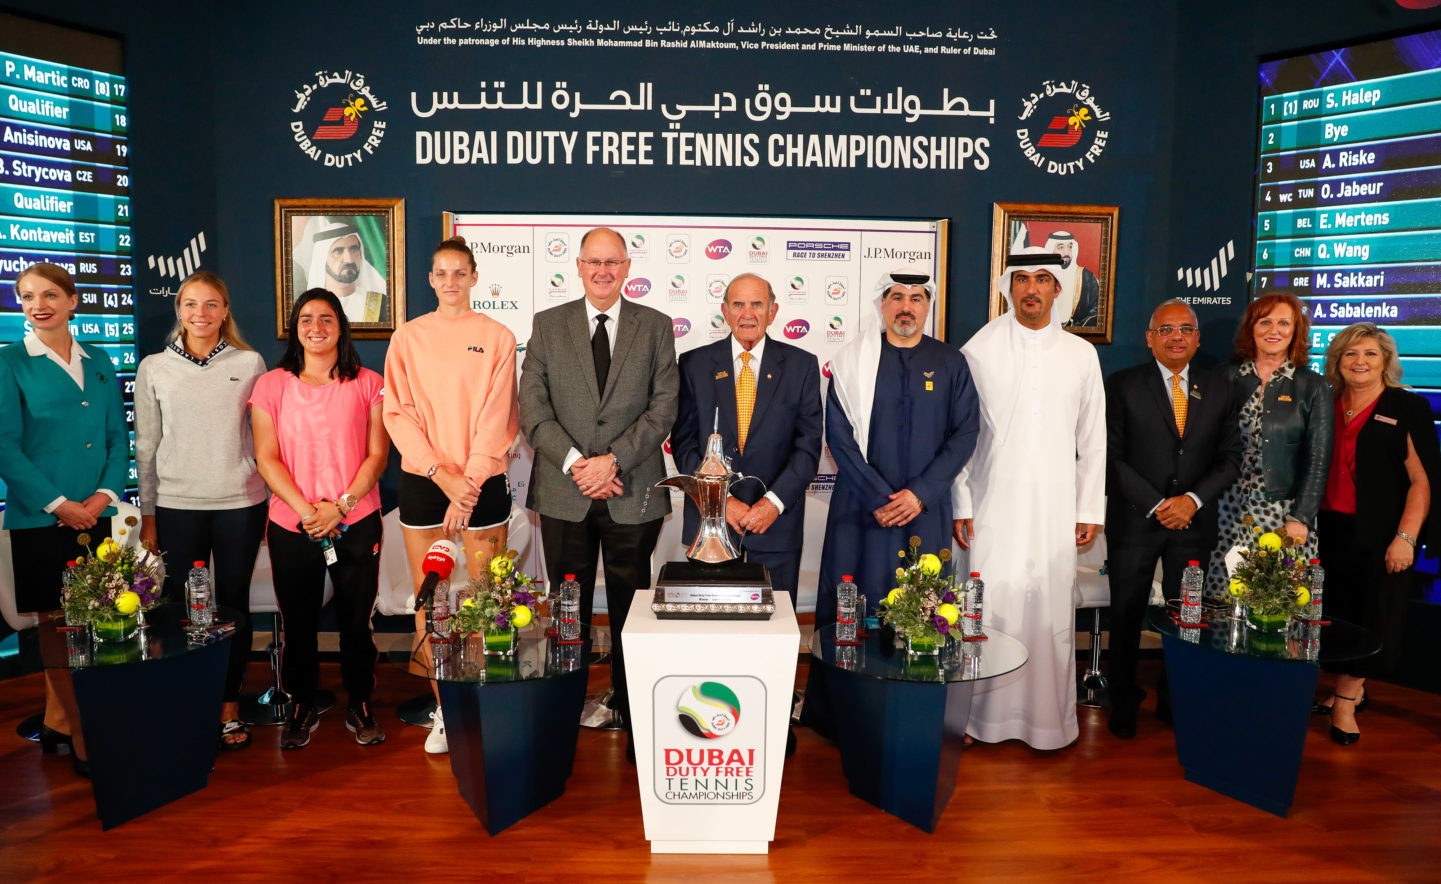 Svitolina and Muguruza meet, Clijsters comeback headlines WTA Dubai